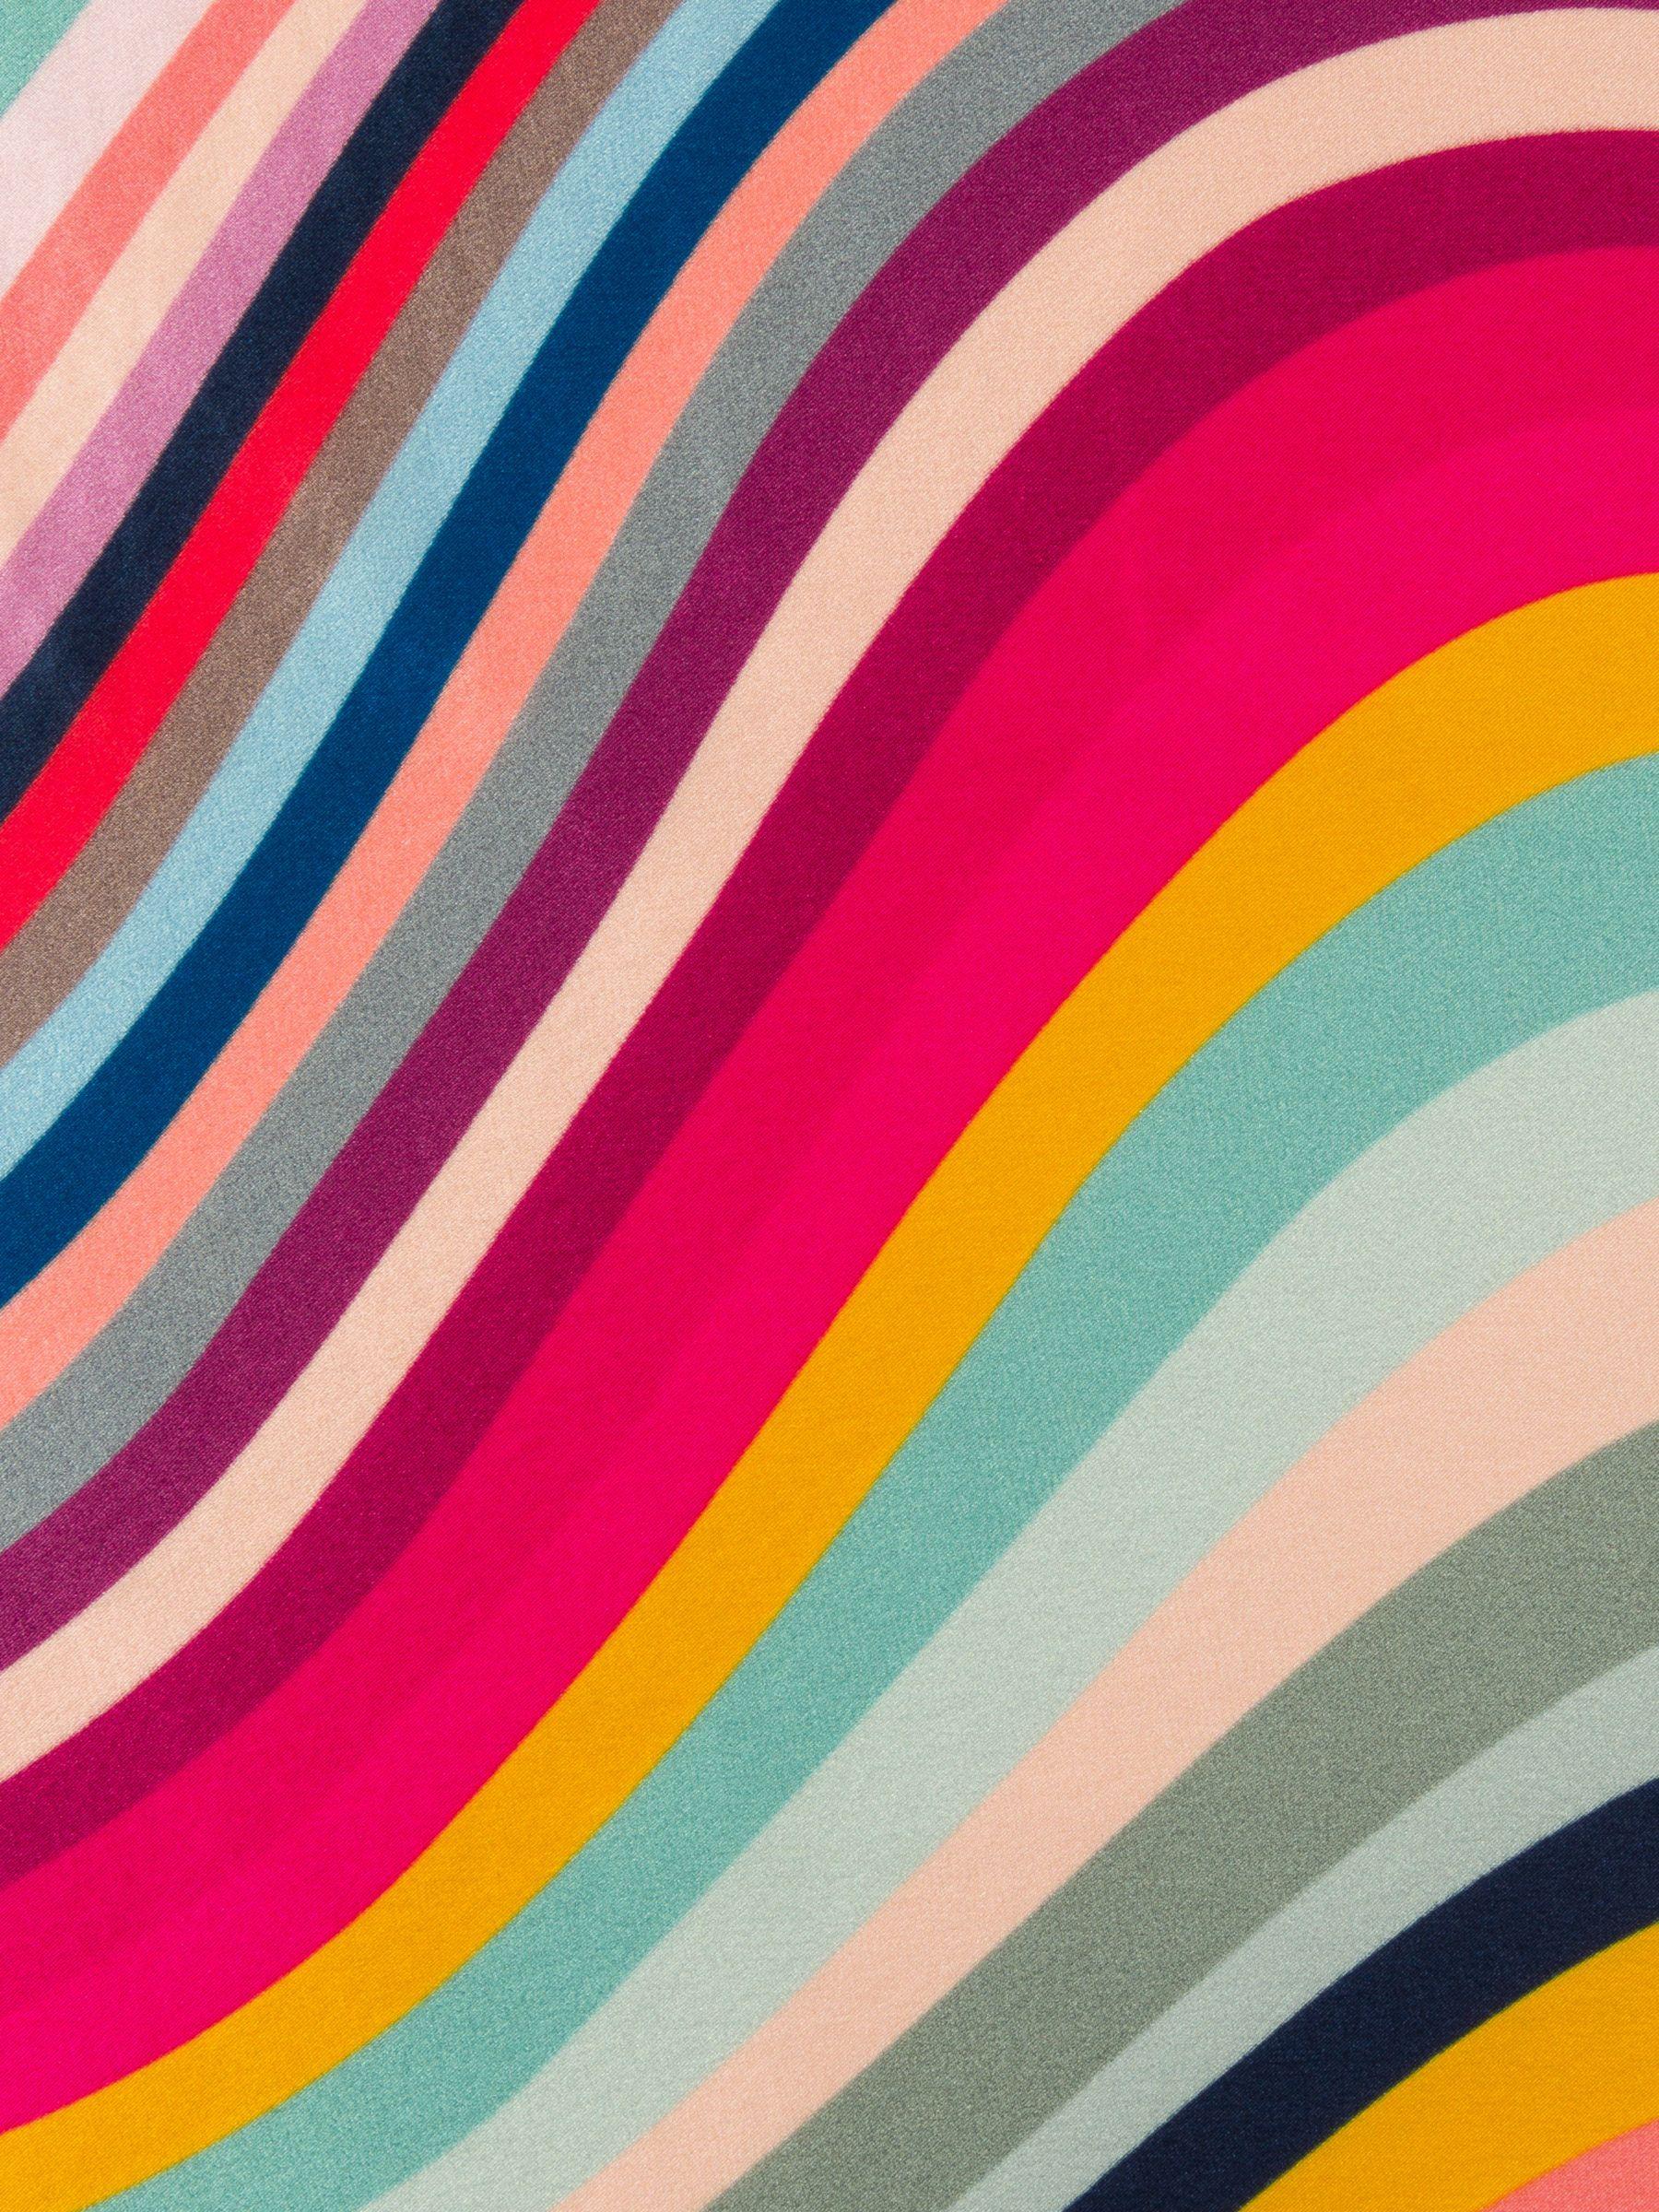 Paul Smith Large Swirl Stripe Silk Scarf, Multi. Paul smith, Retro wallpaper, Stripes wallpaper